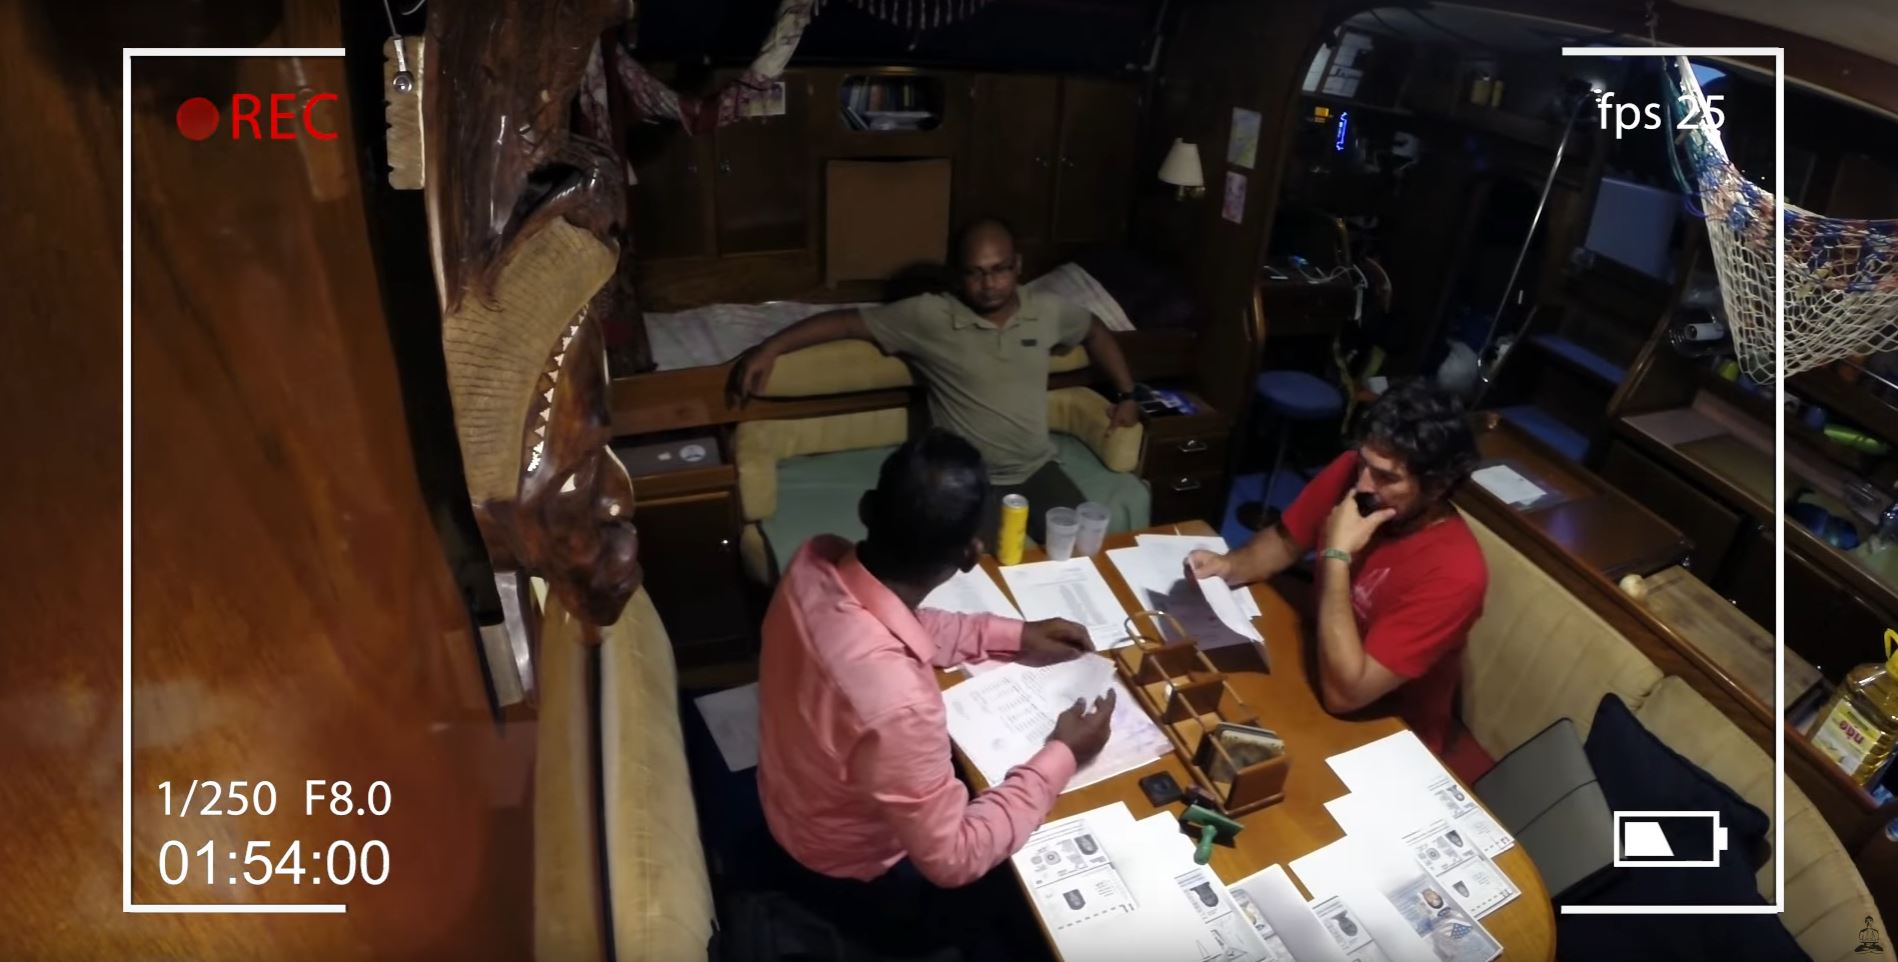 india customs sailing check in bureaucracy